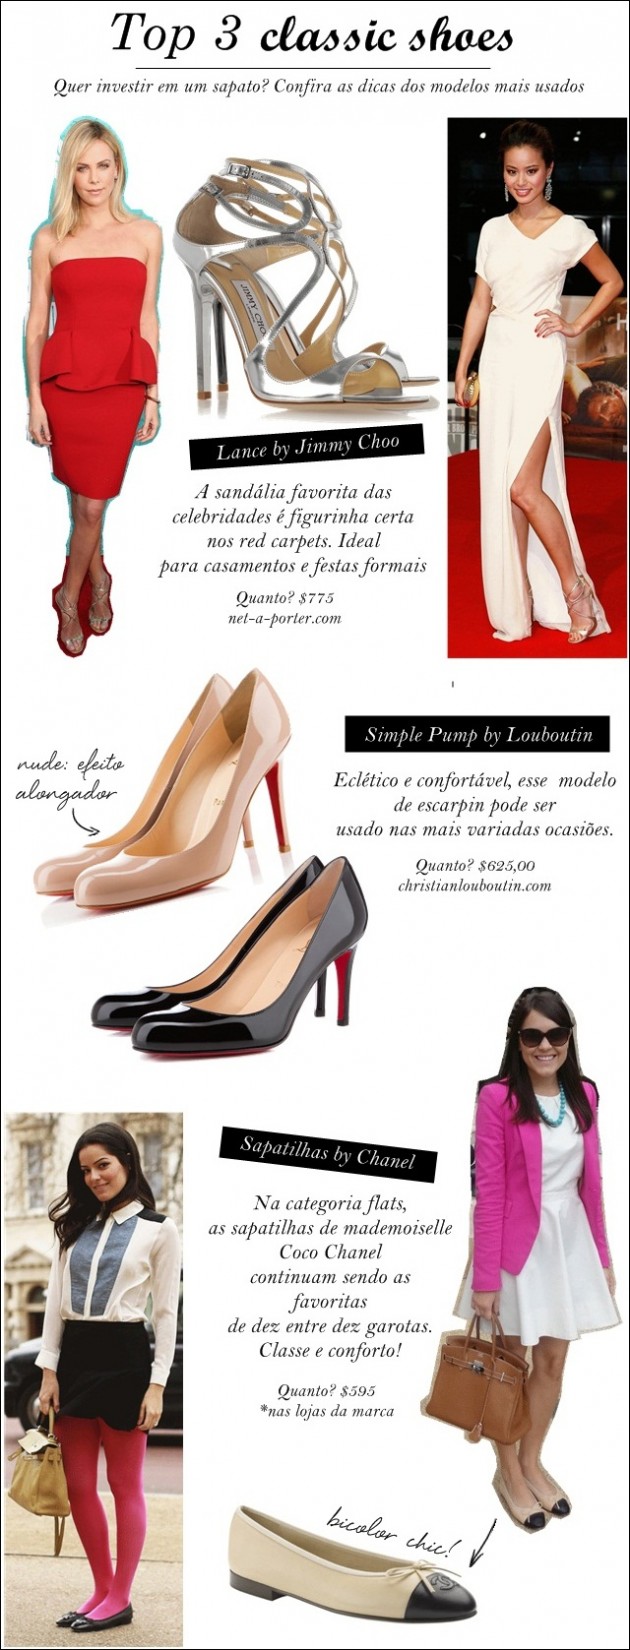 Lari-Duarte-.com-Blog-da-Lari-classic-shoes-Chanel-sapatilhas-flats-Lance-Jimmy-Choo-simple-pump-Louboutin-sapatos-clássicos-onde-encontrar (1)